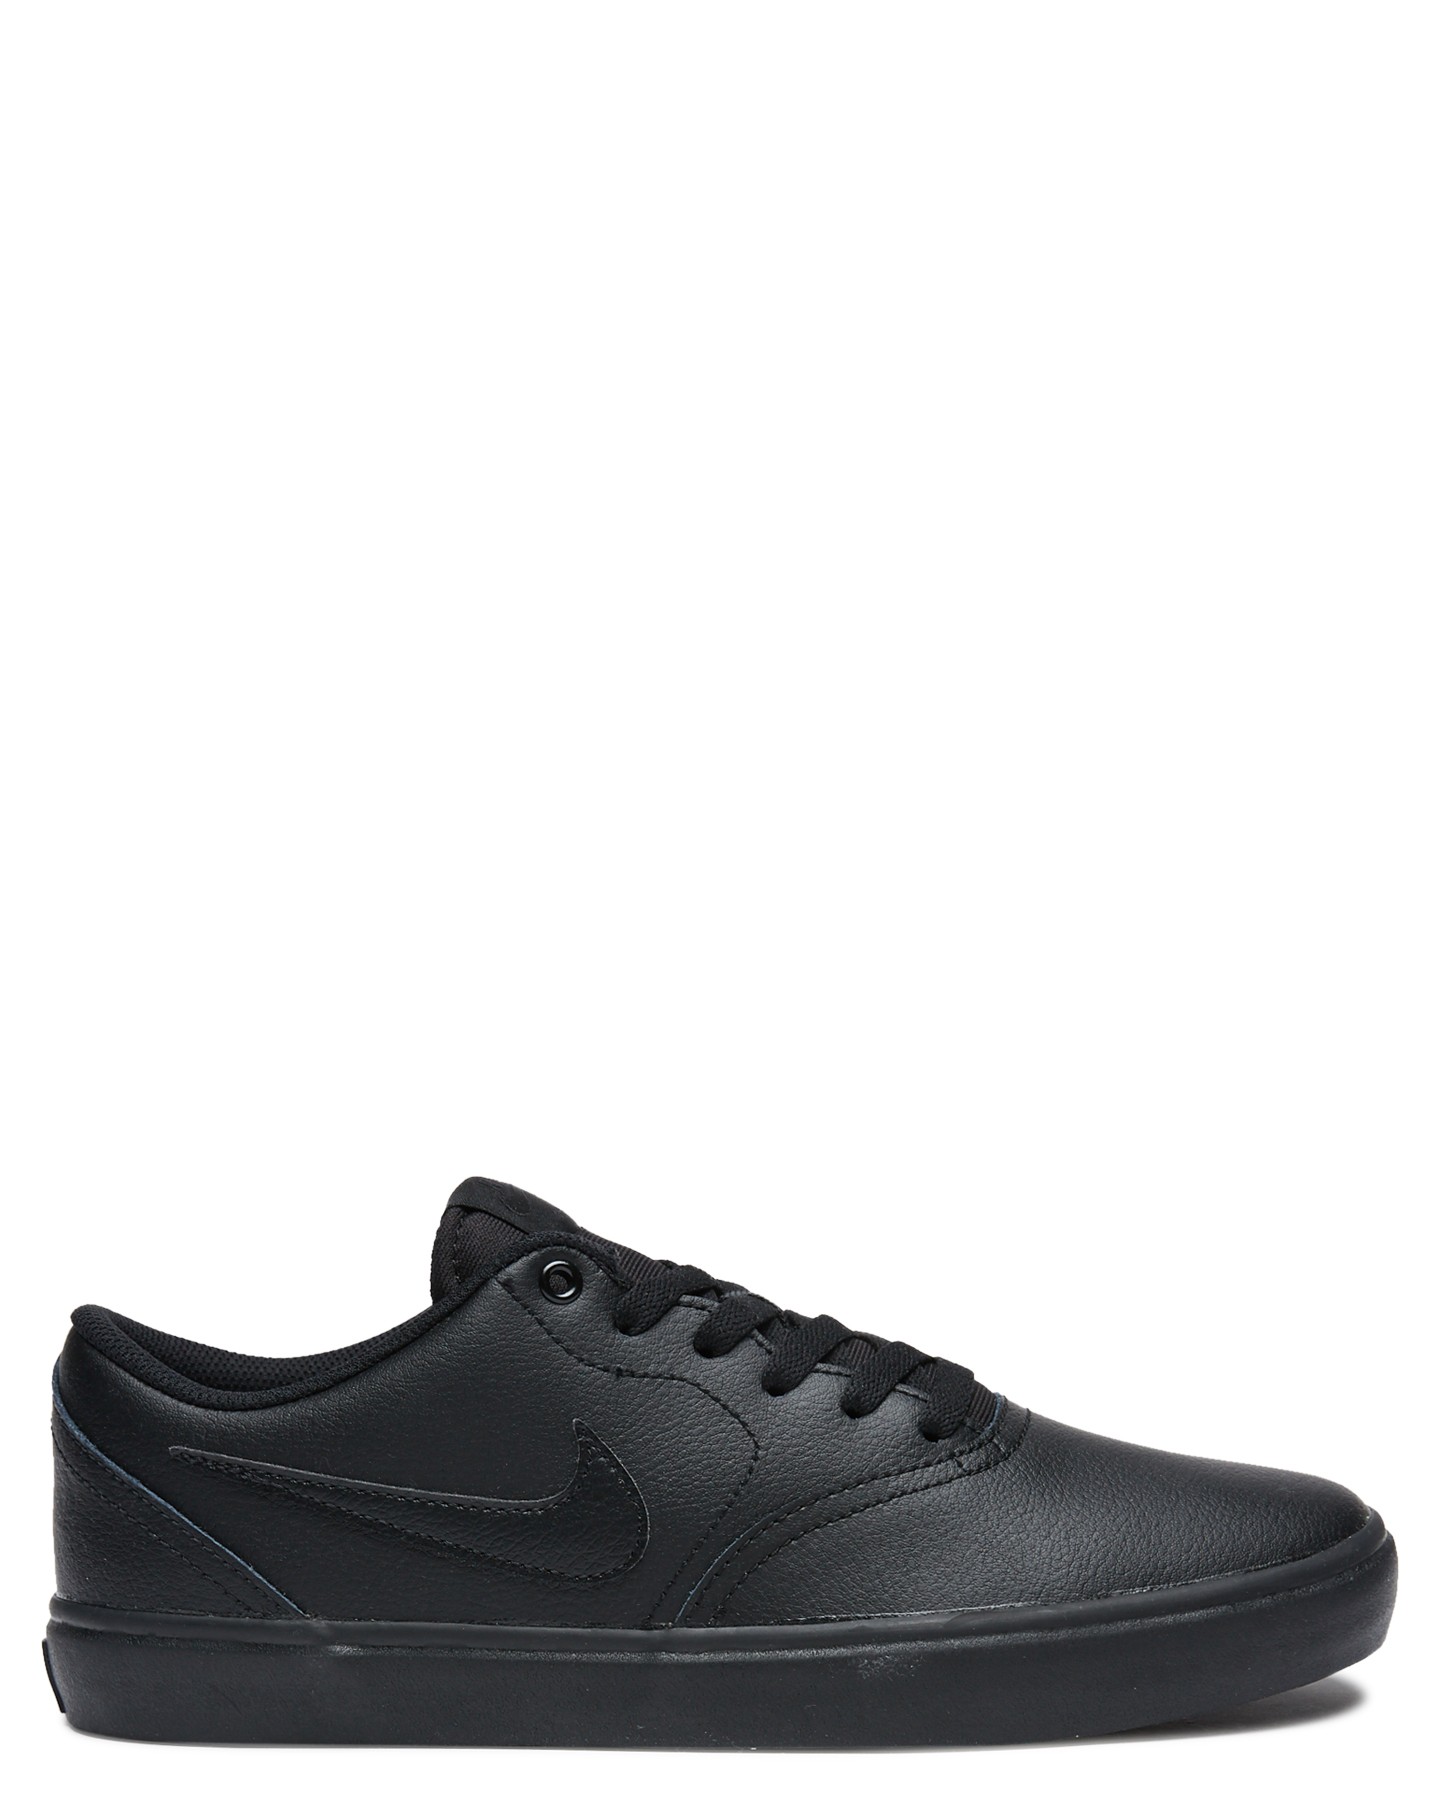 black nike sb shoes Online Shopping for 